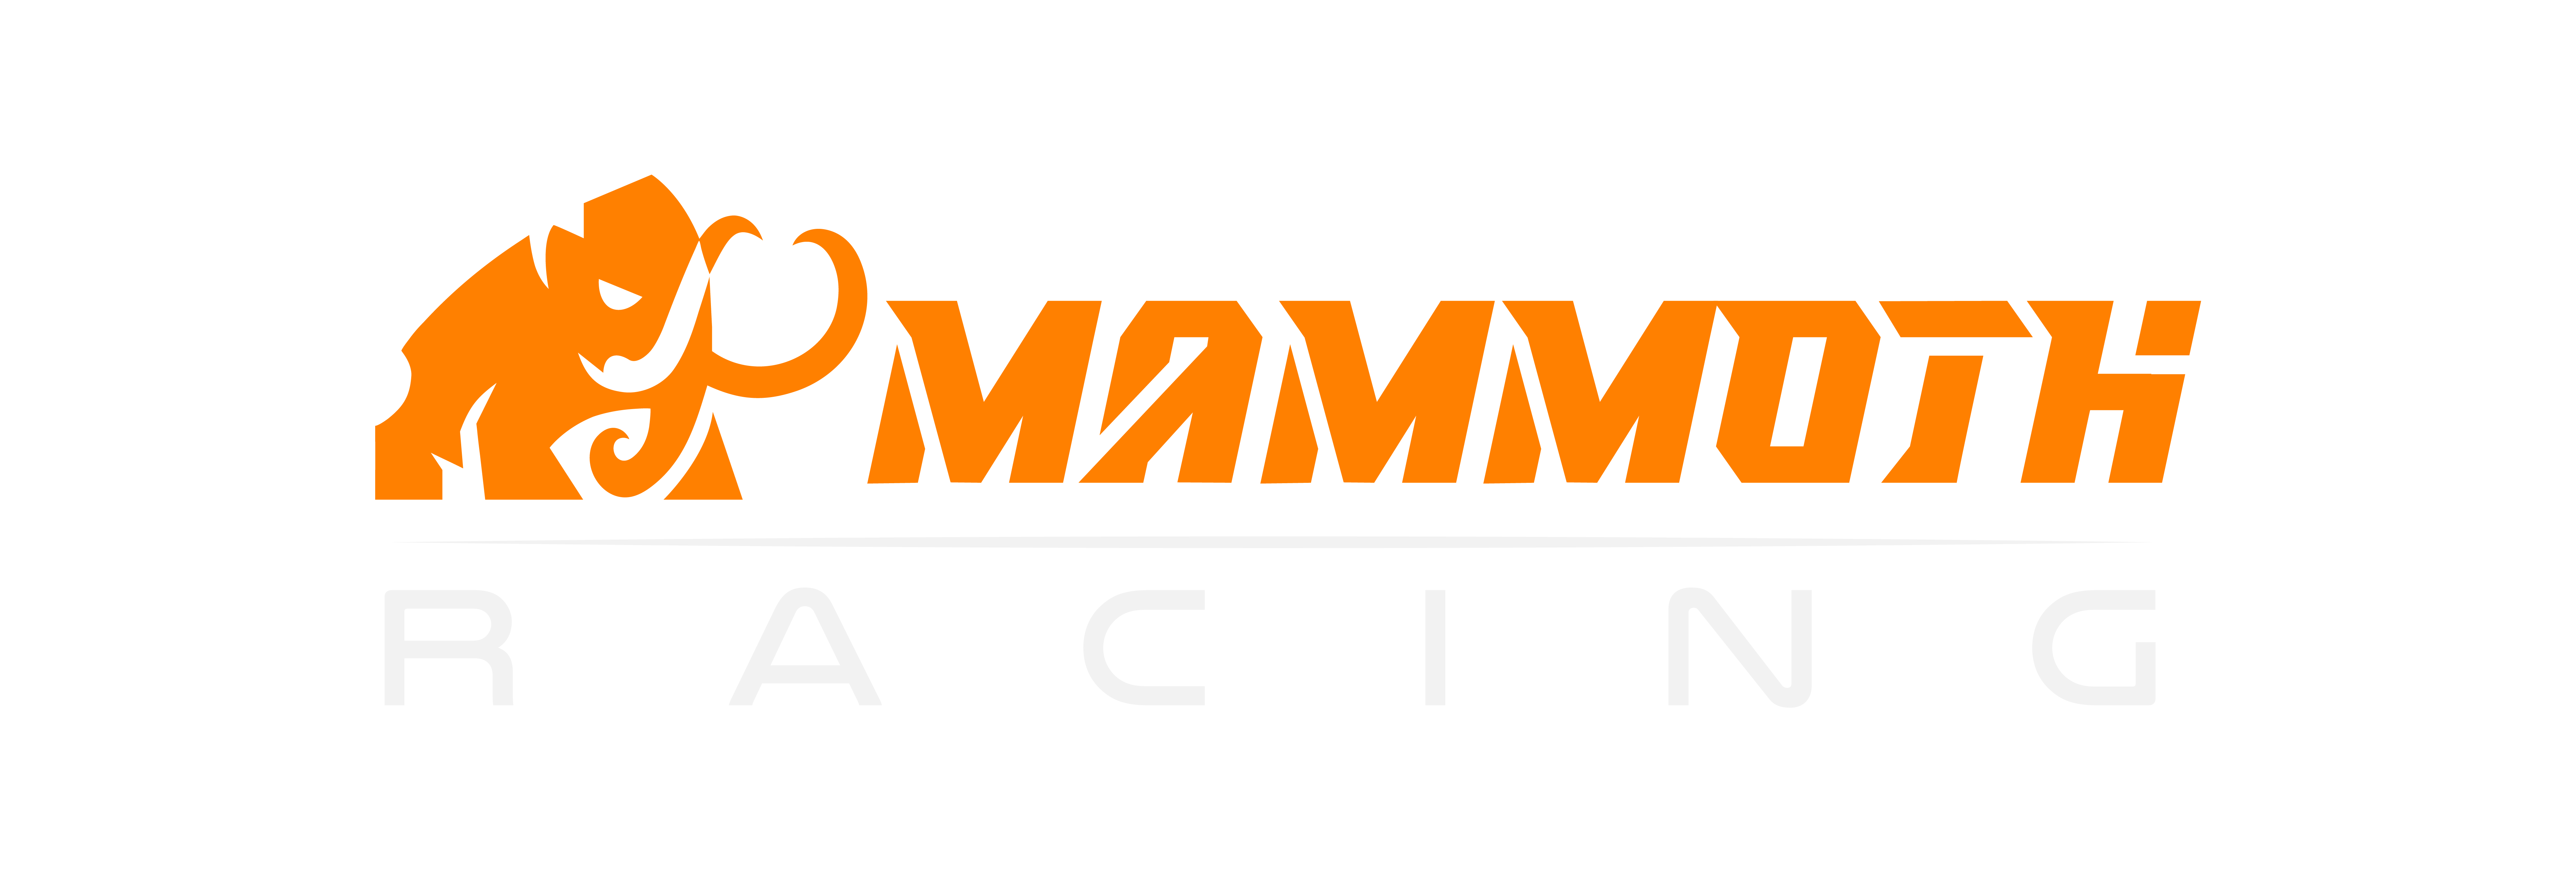 Mammoth Racing